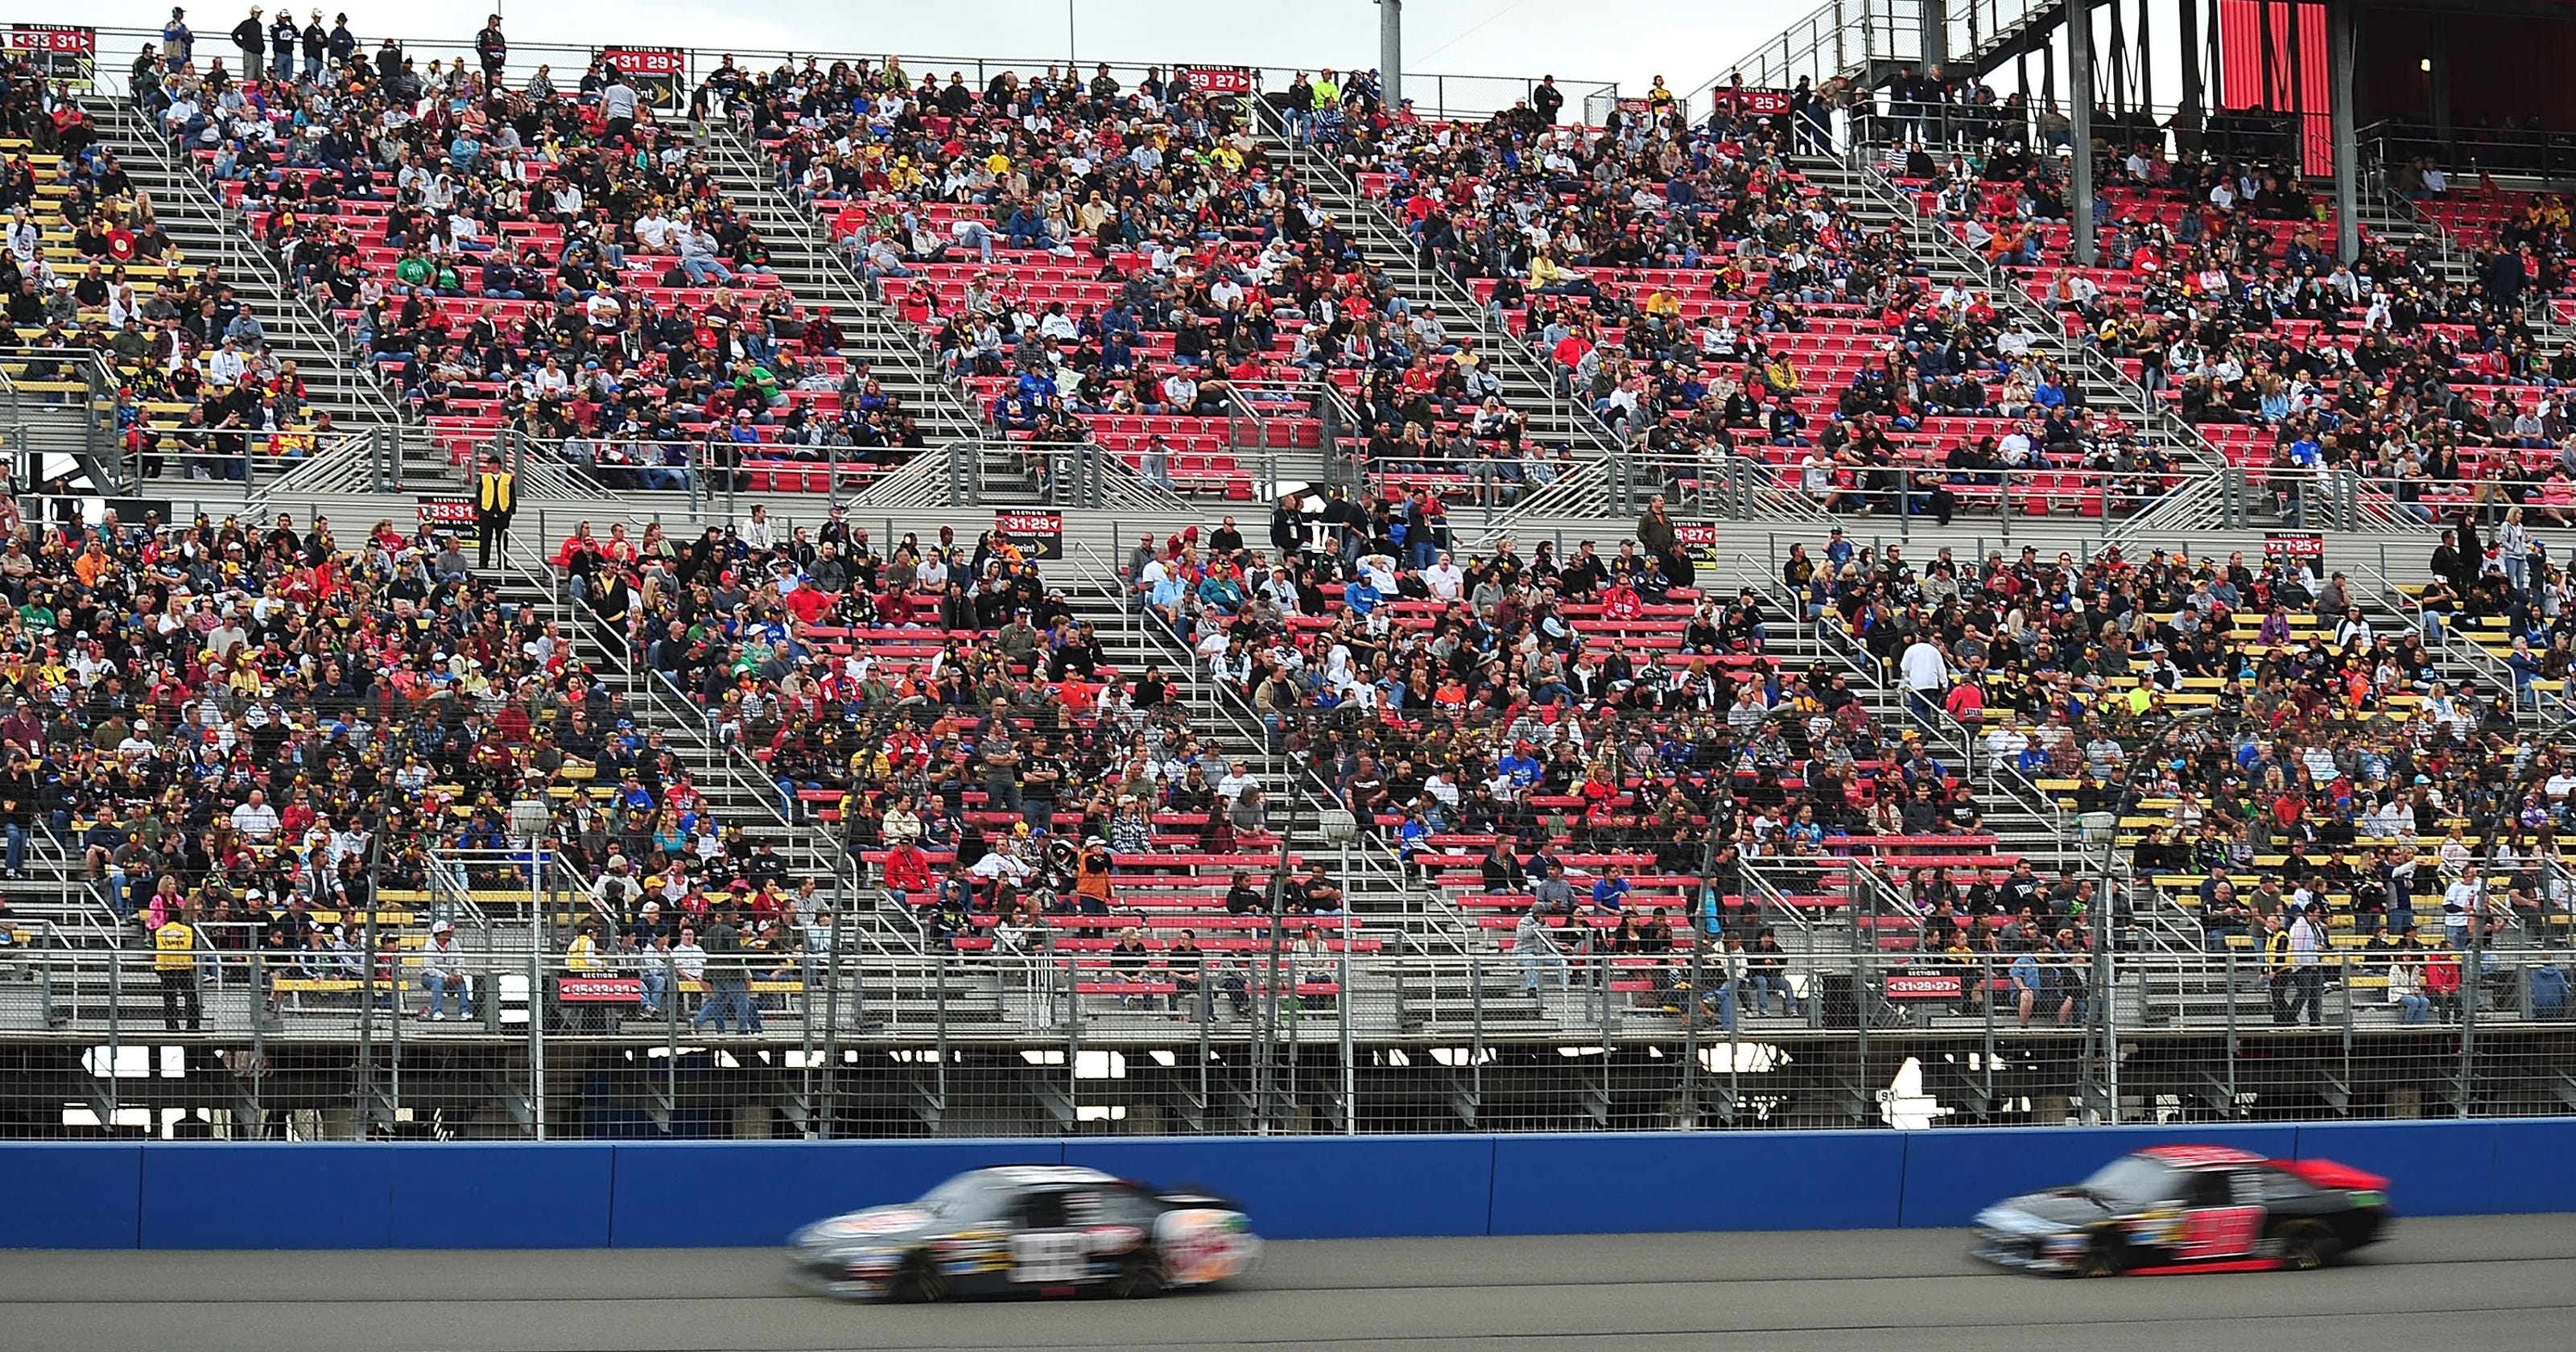 NASCAR will no longer provide attendance estimates